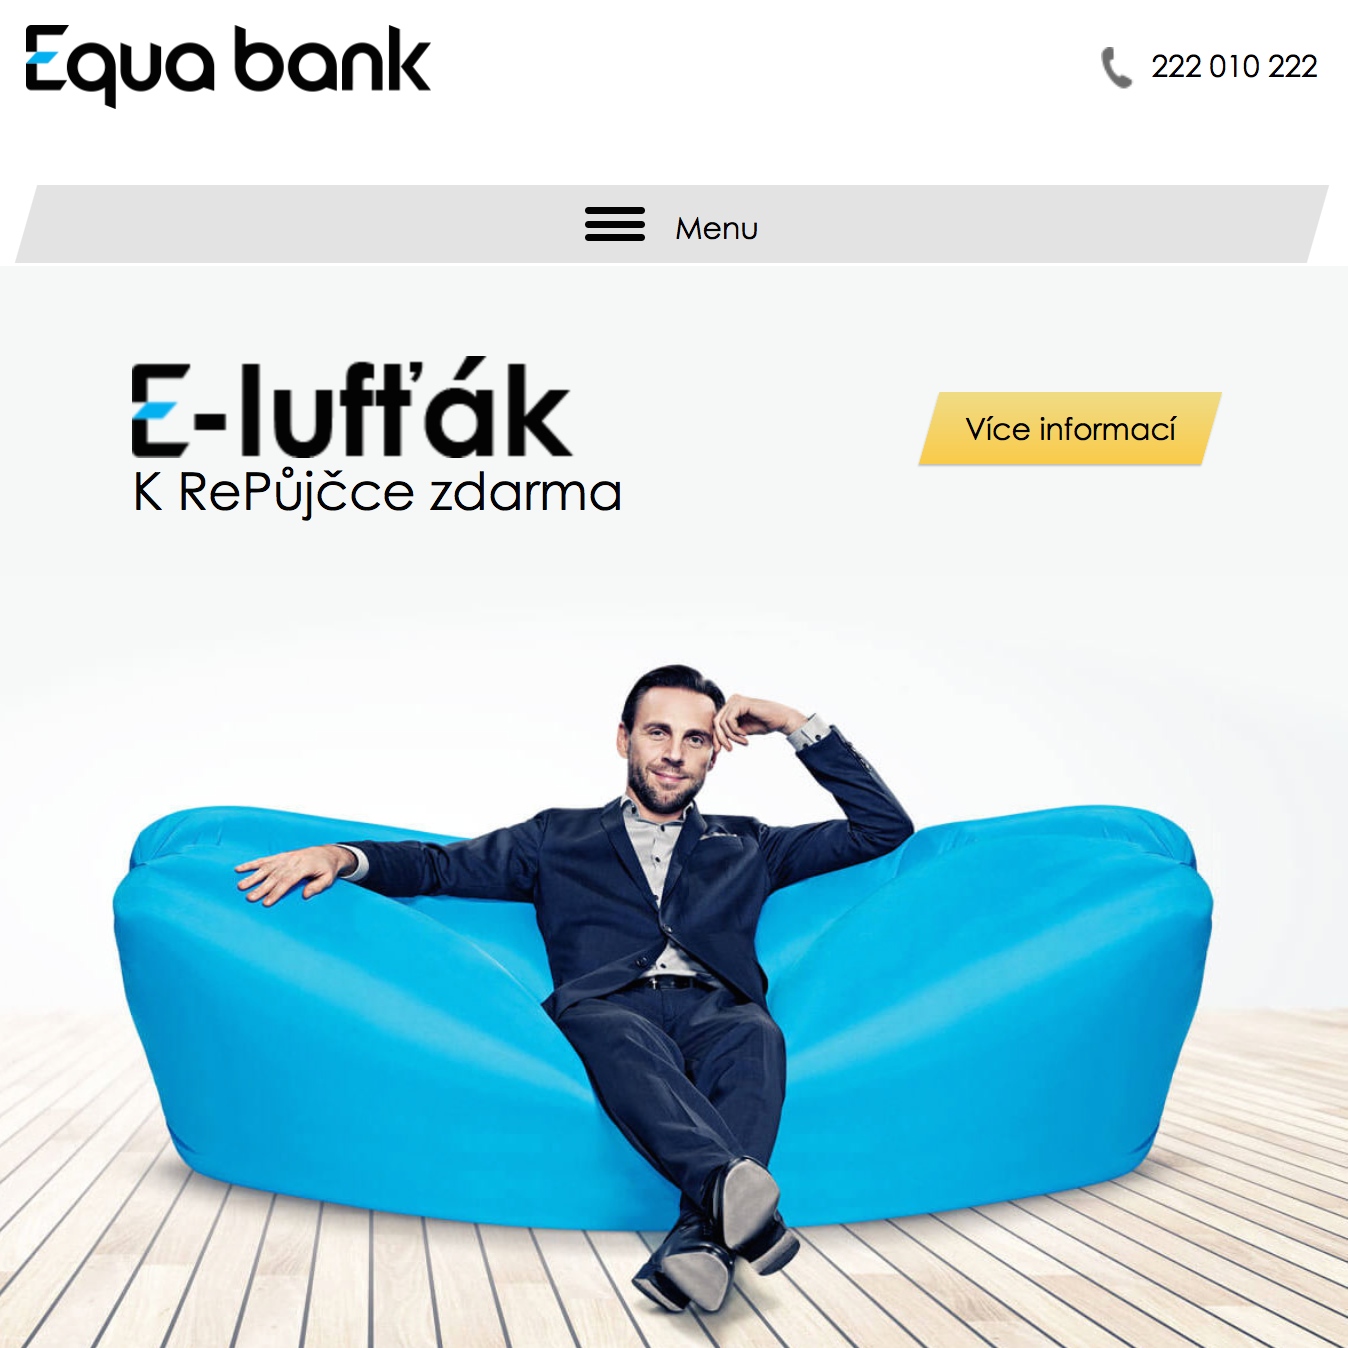 Equa bank | digital